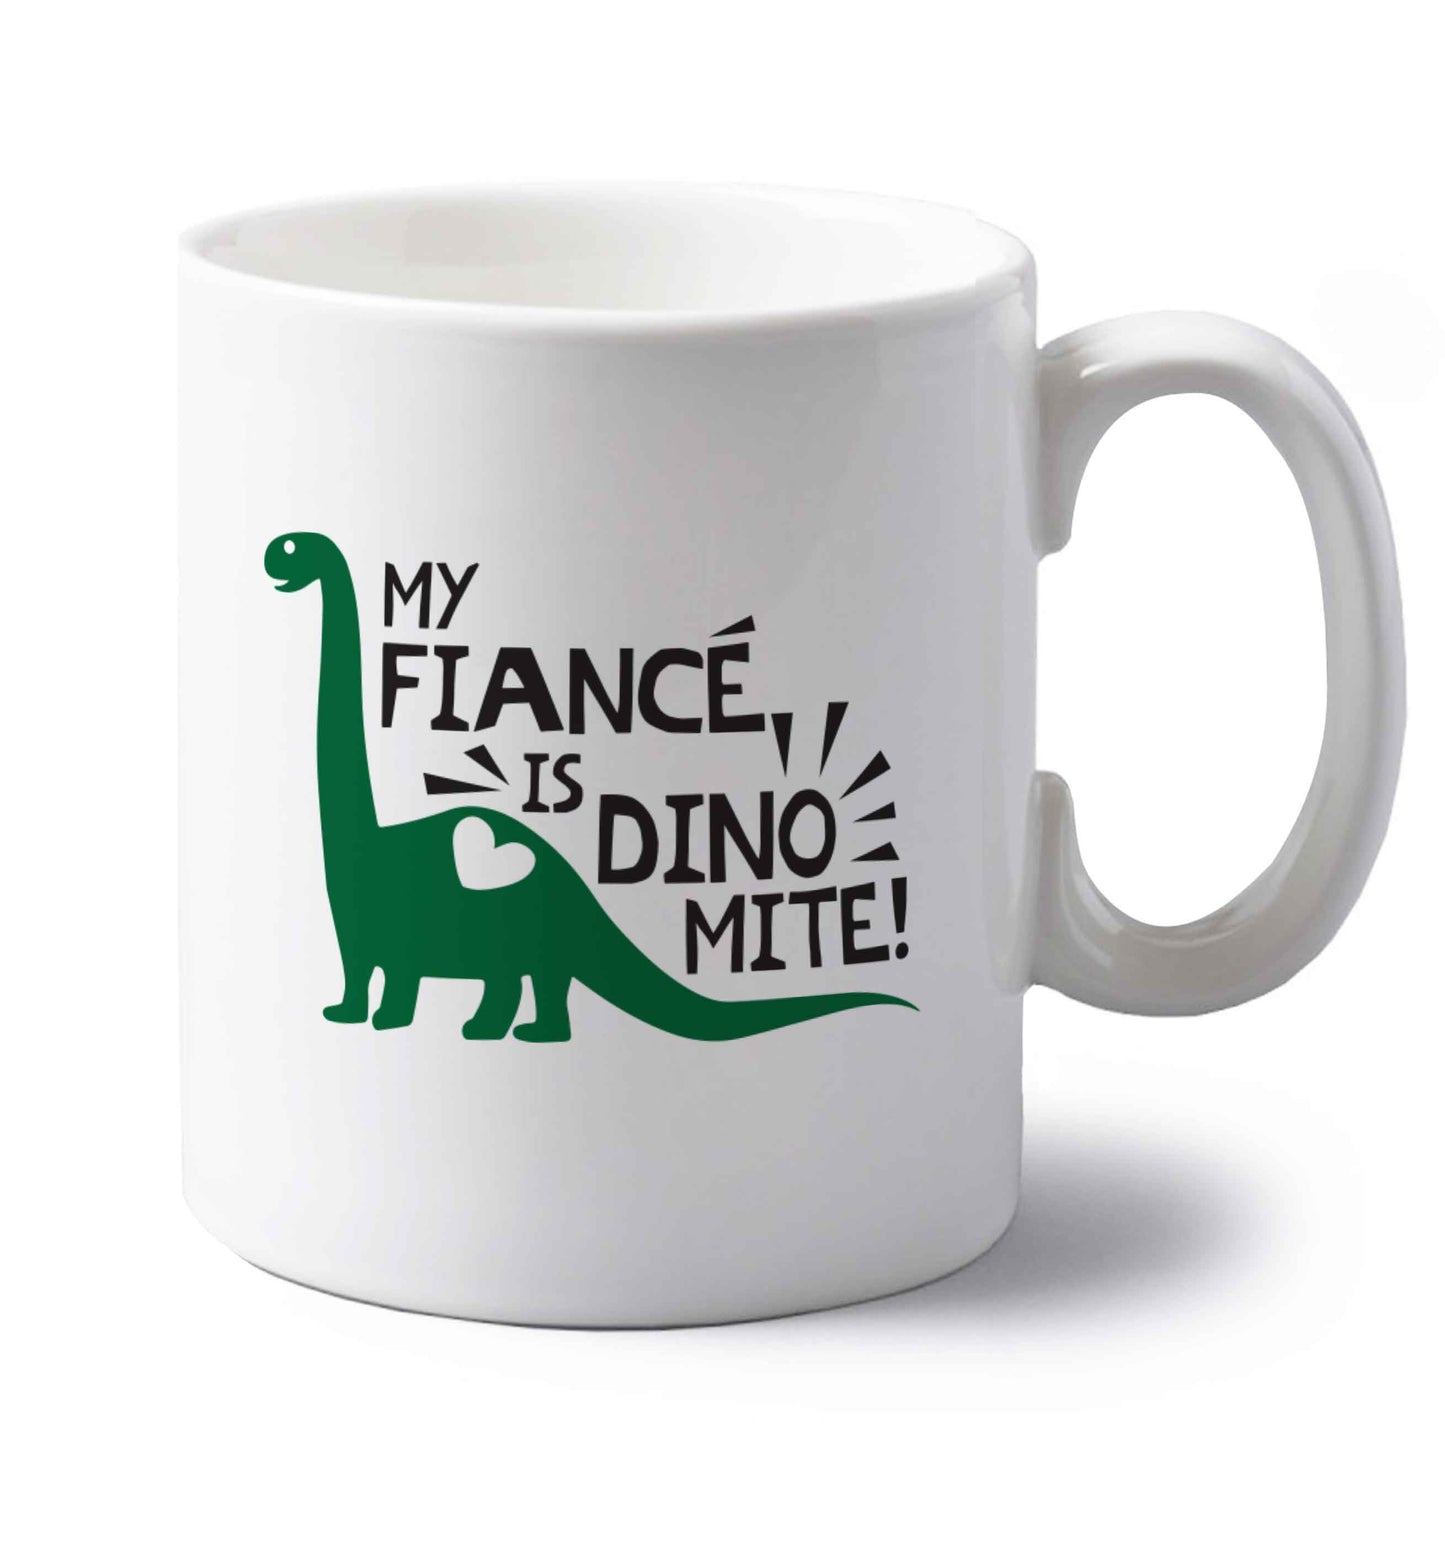 My fiance is dinomite! left handed white ceramic mug 